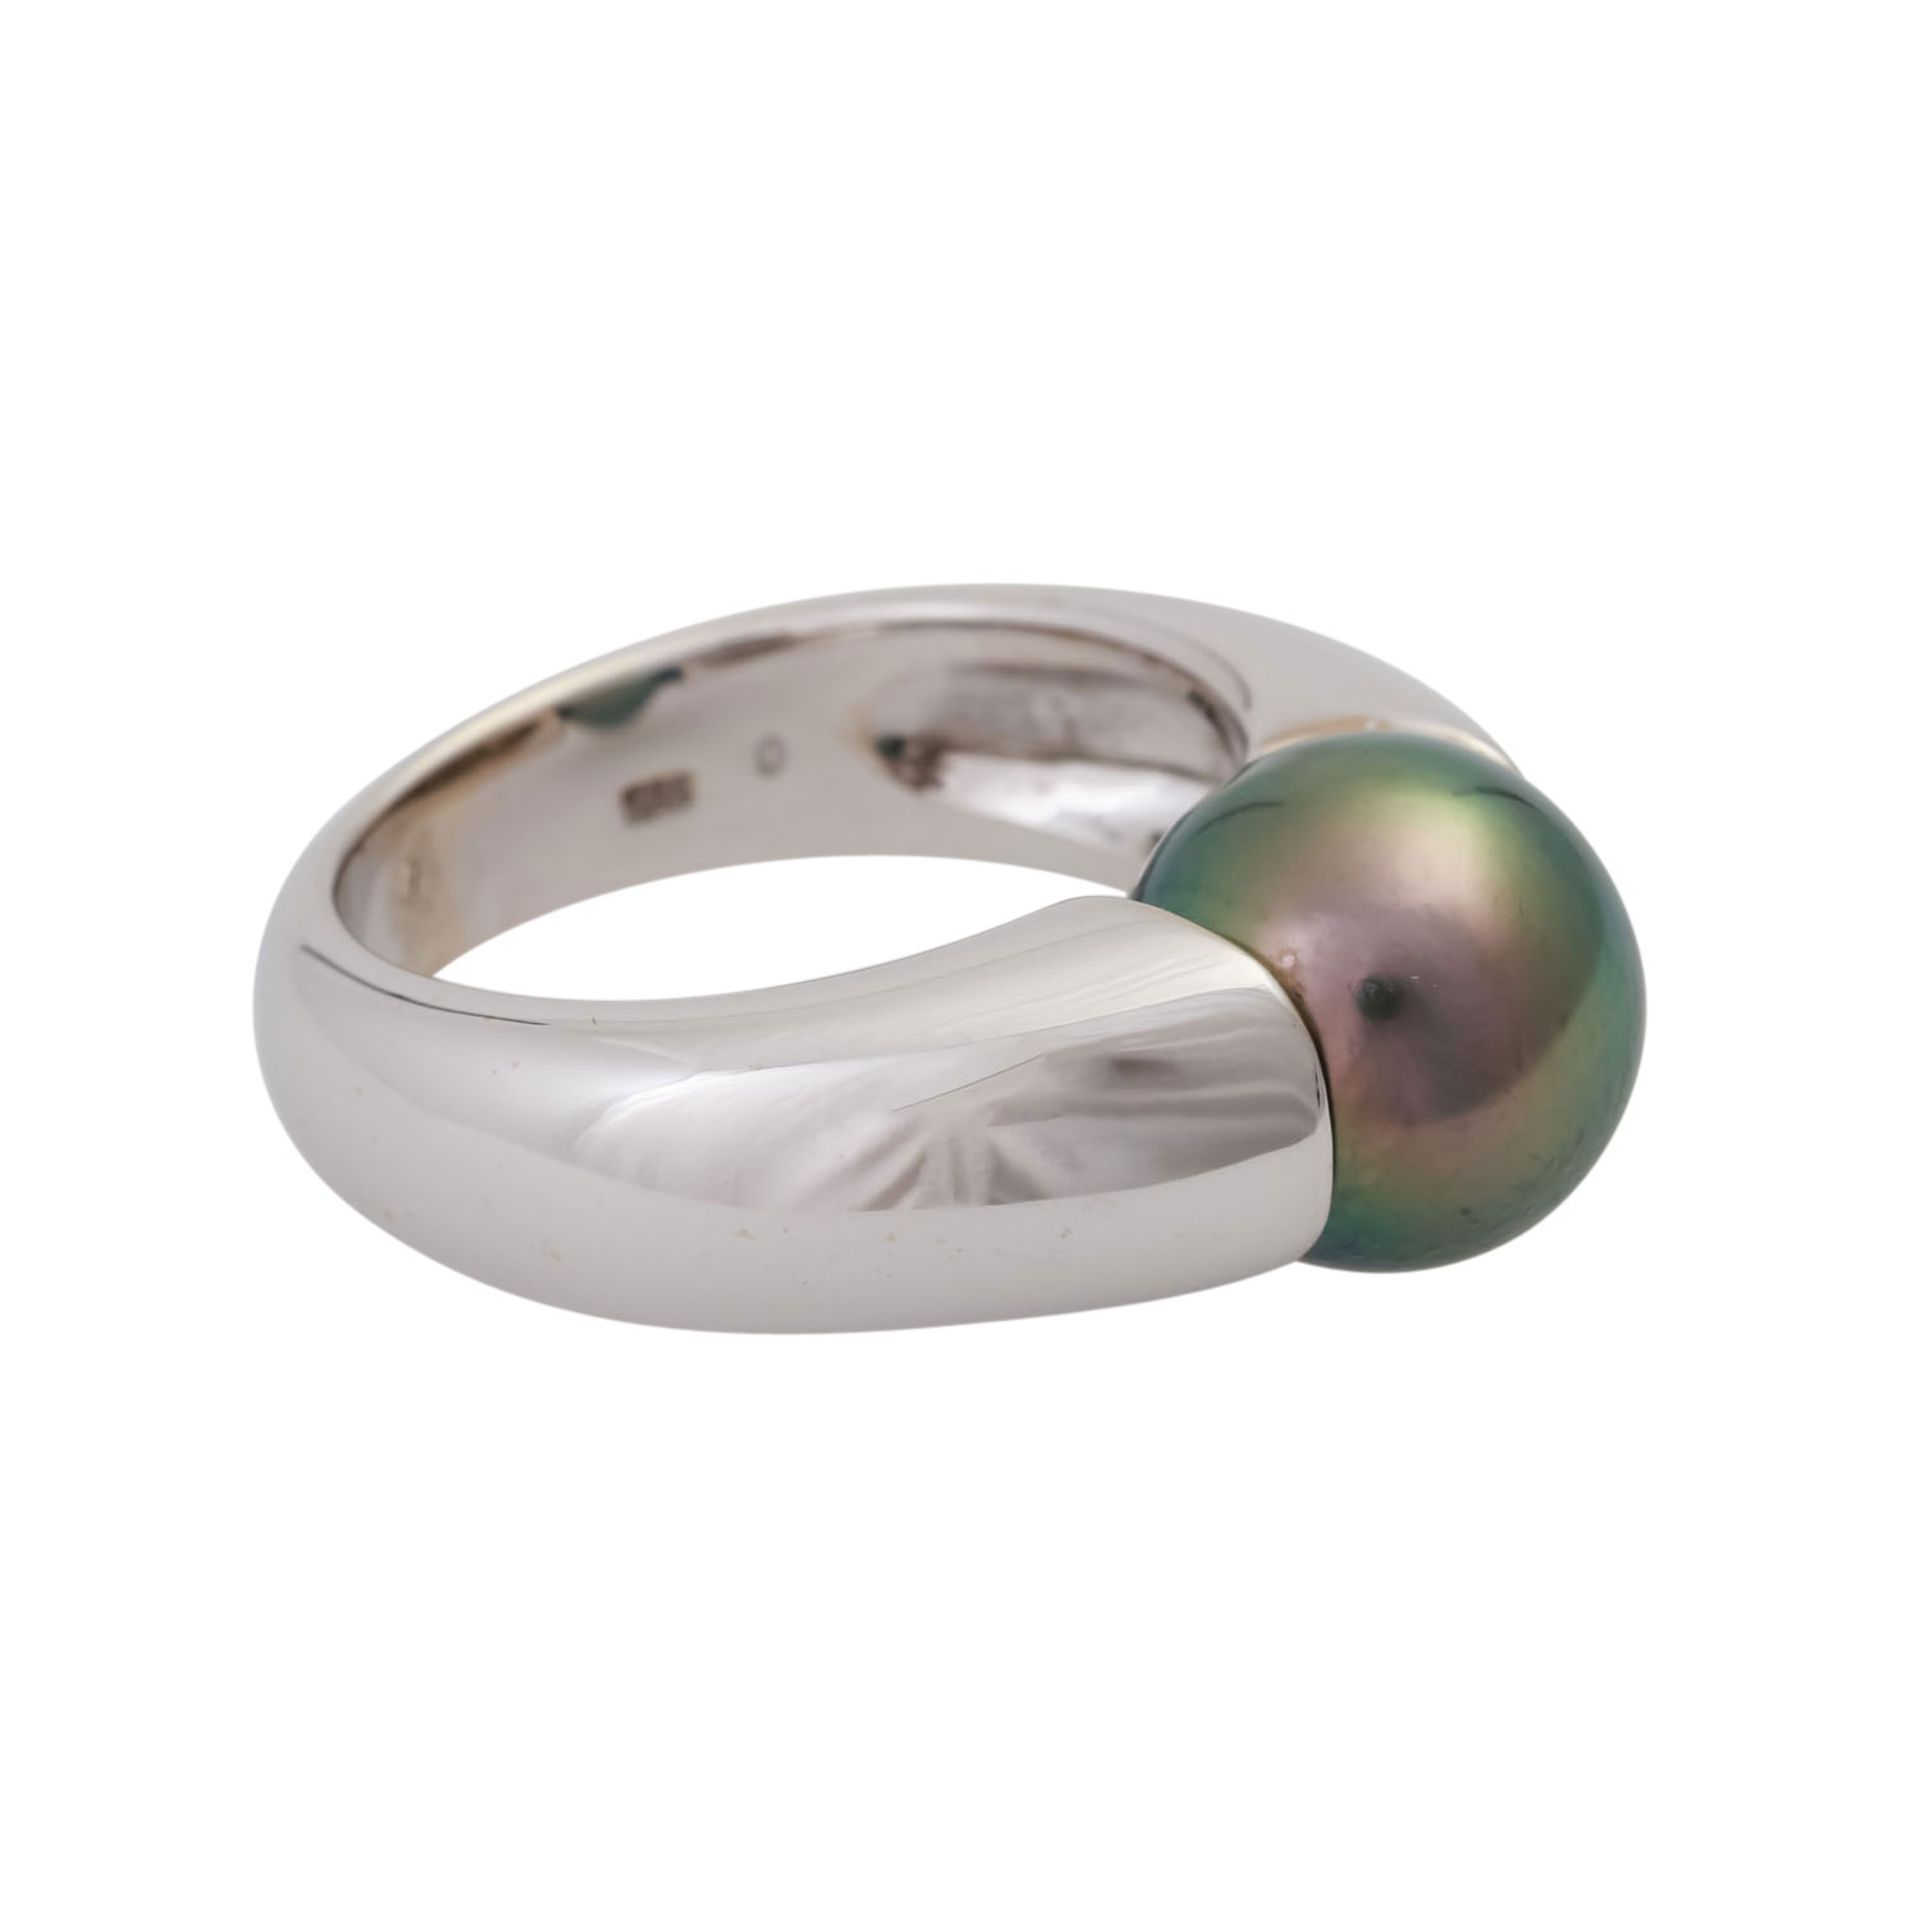 Ring mit Tahiti Zuchtperle, ca. 11 mm, grau-grünmit rosa Oberton, schöner Lüster, WG 14K, RW 57, - Image 2 of 4